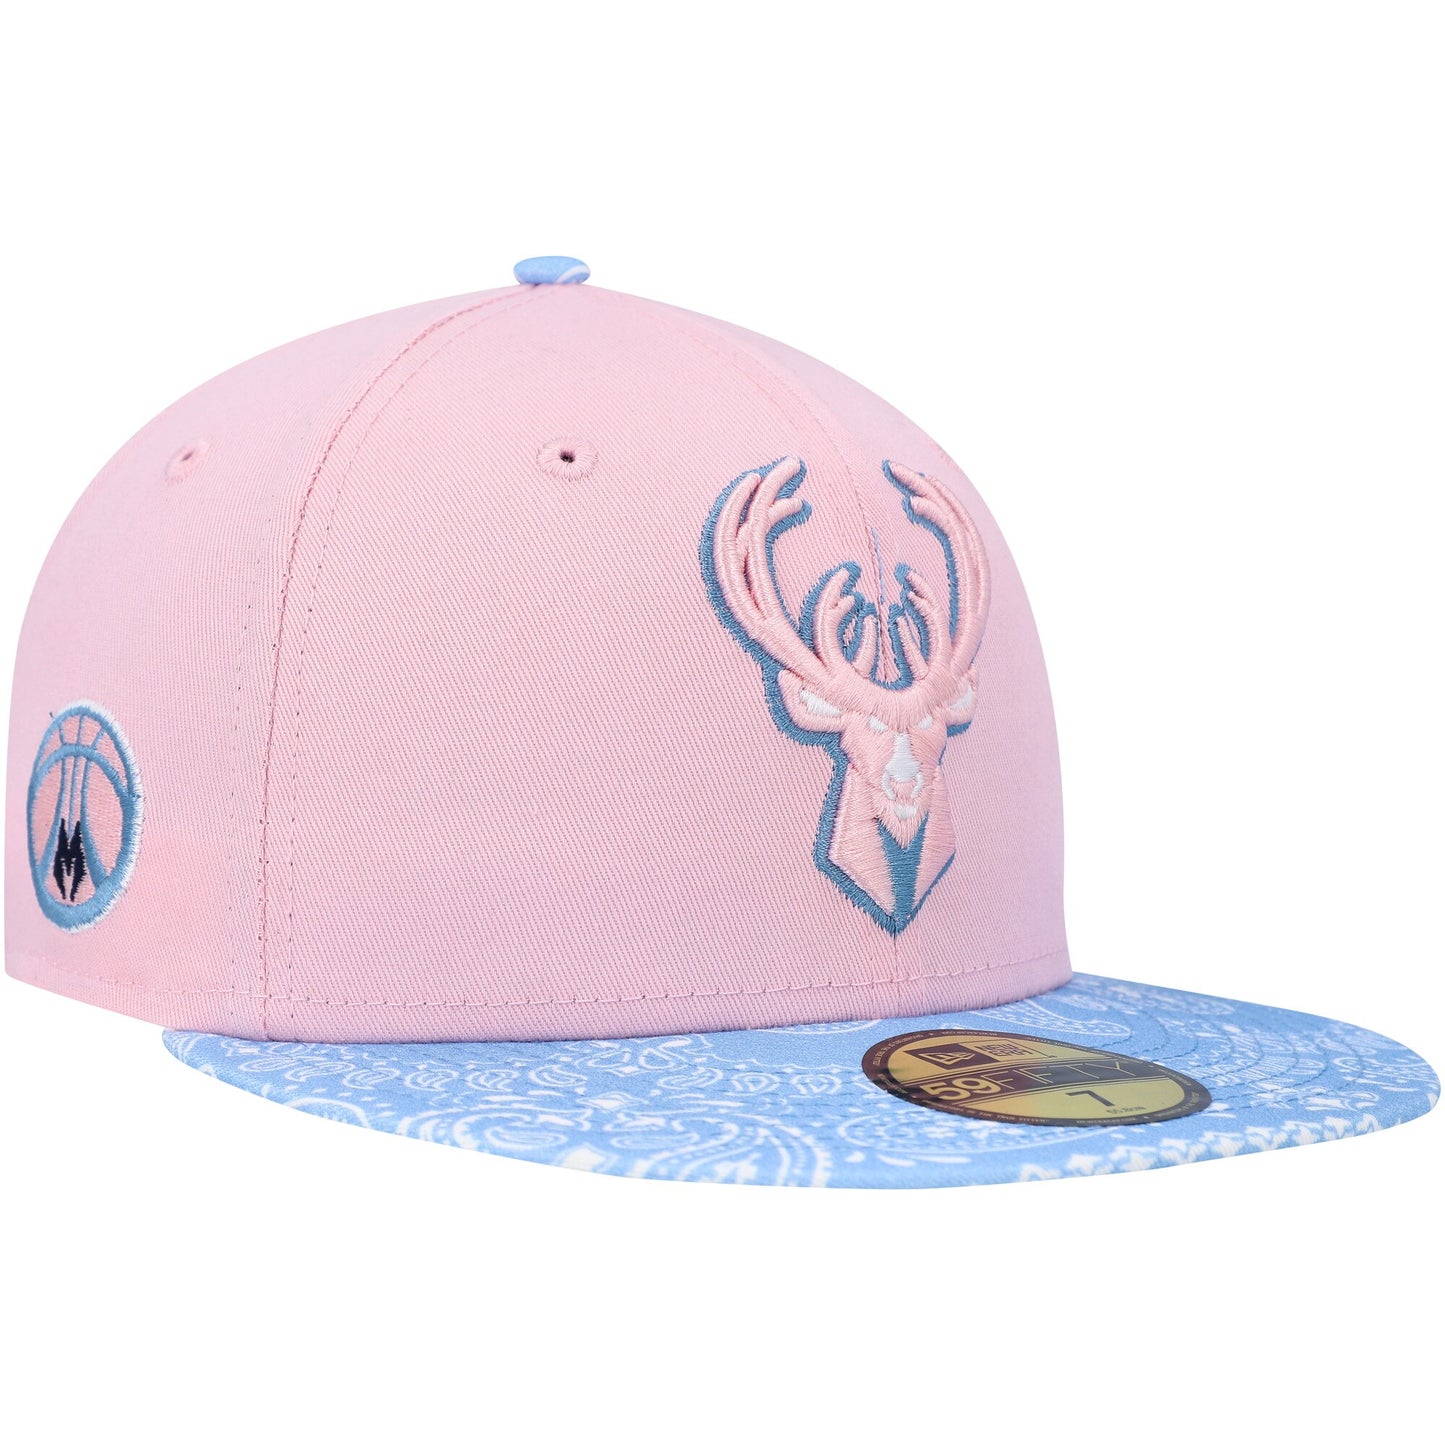 Milwaukee Bucks New Era Paisley Visor 59FIFTY Fitted Hat - Pink/Light Blue